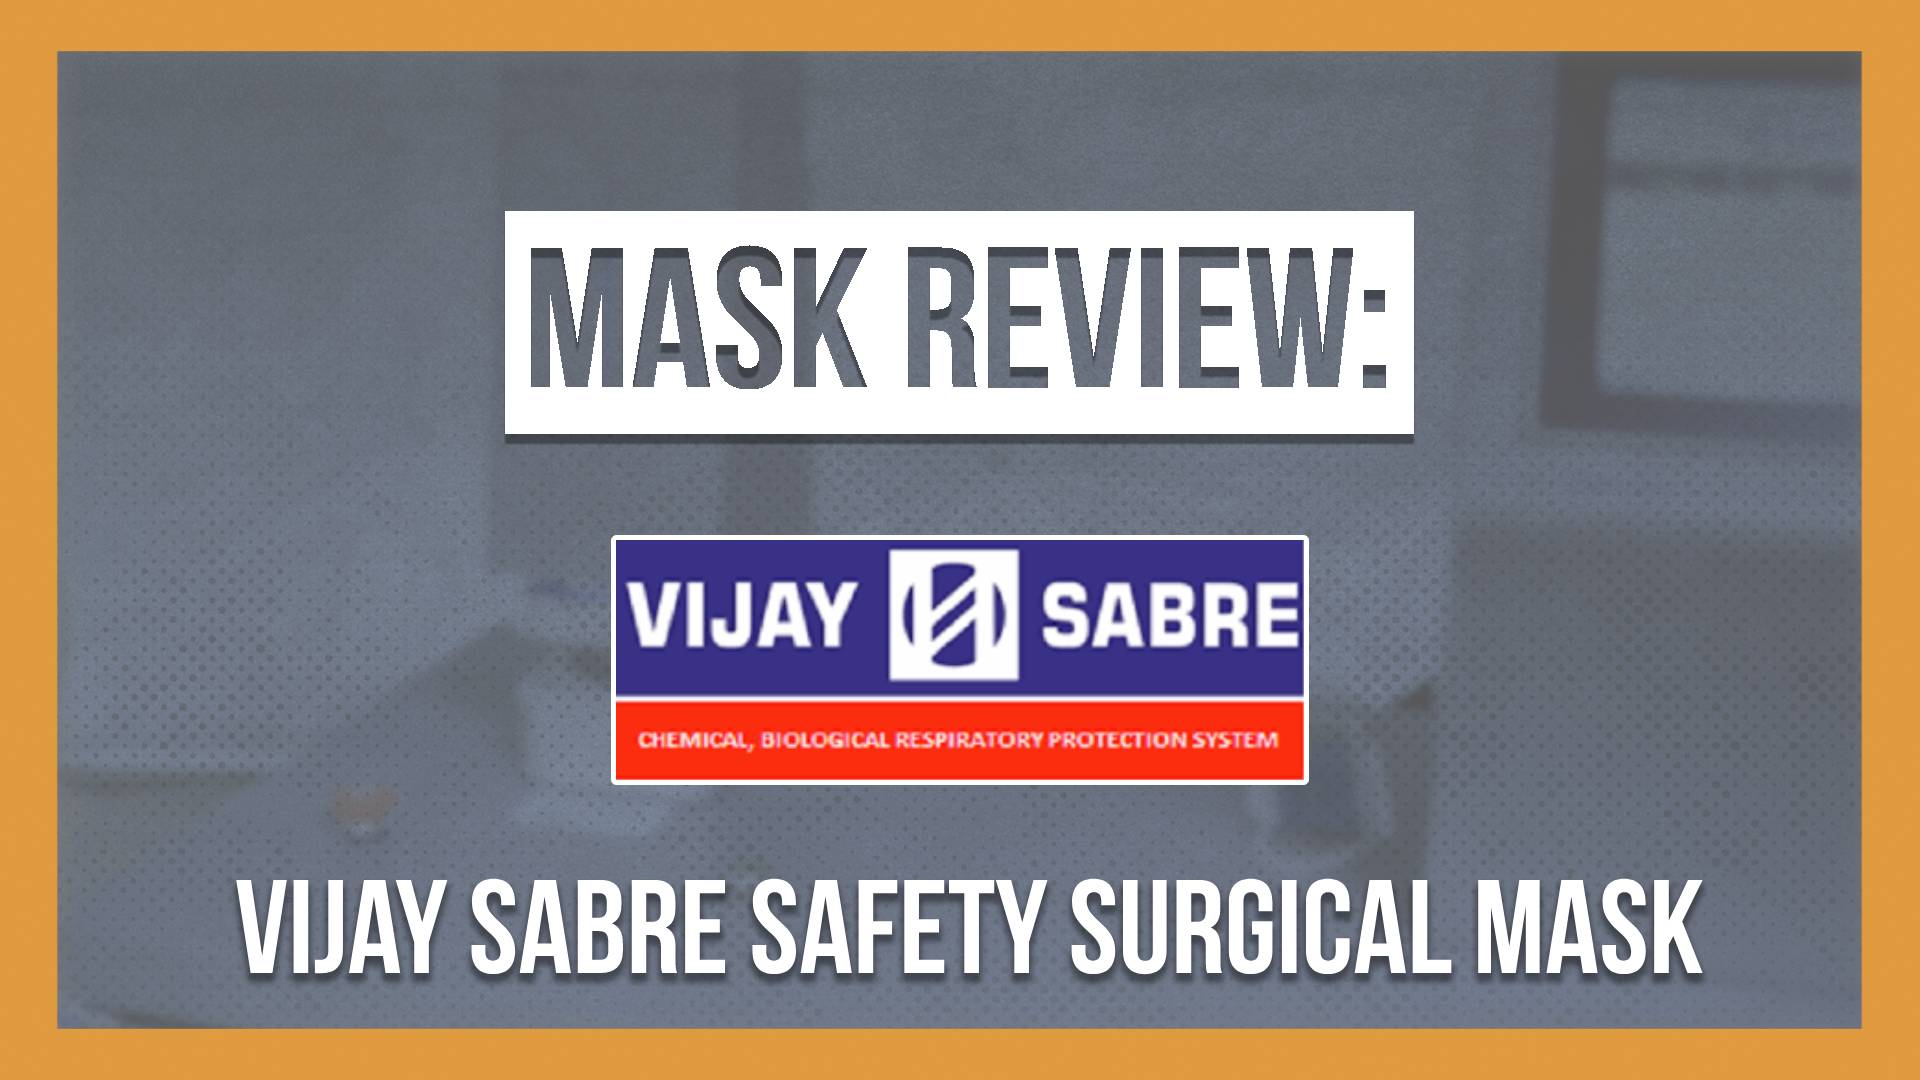 Surgical Mask - Vijay Sabre Safety